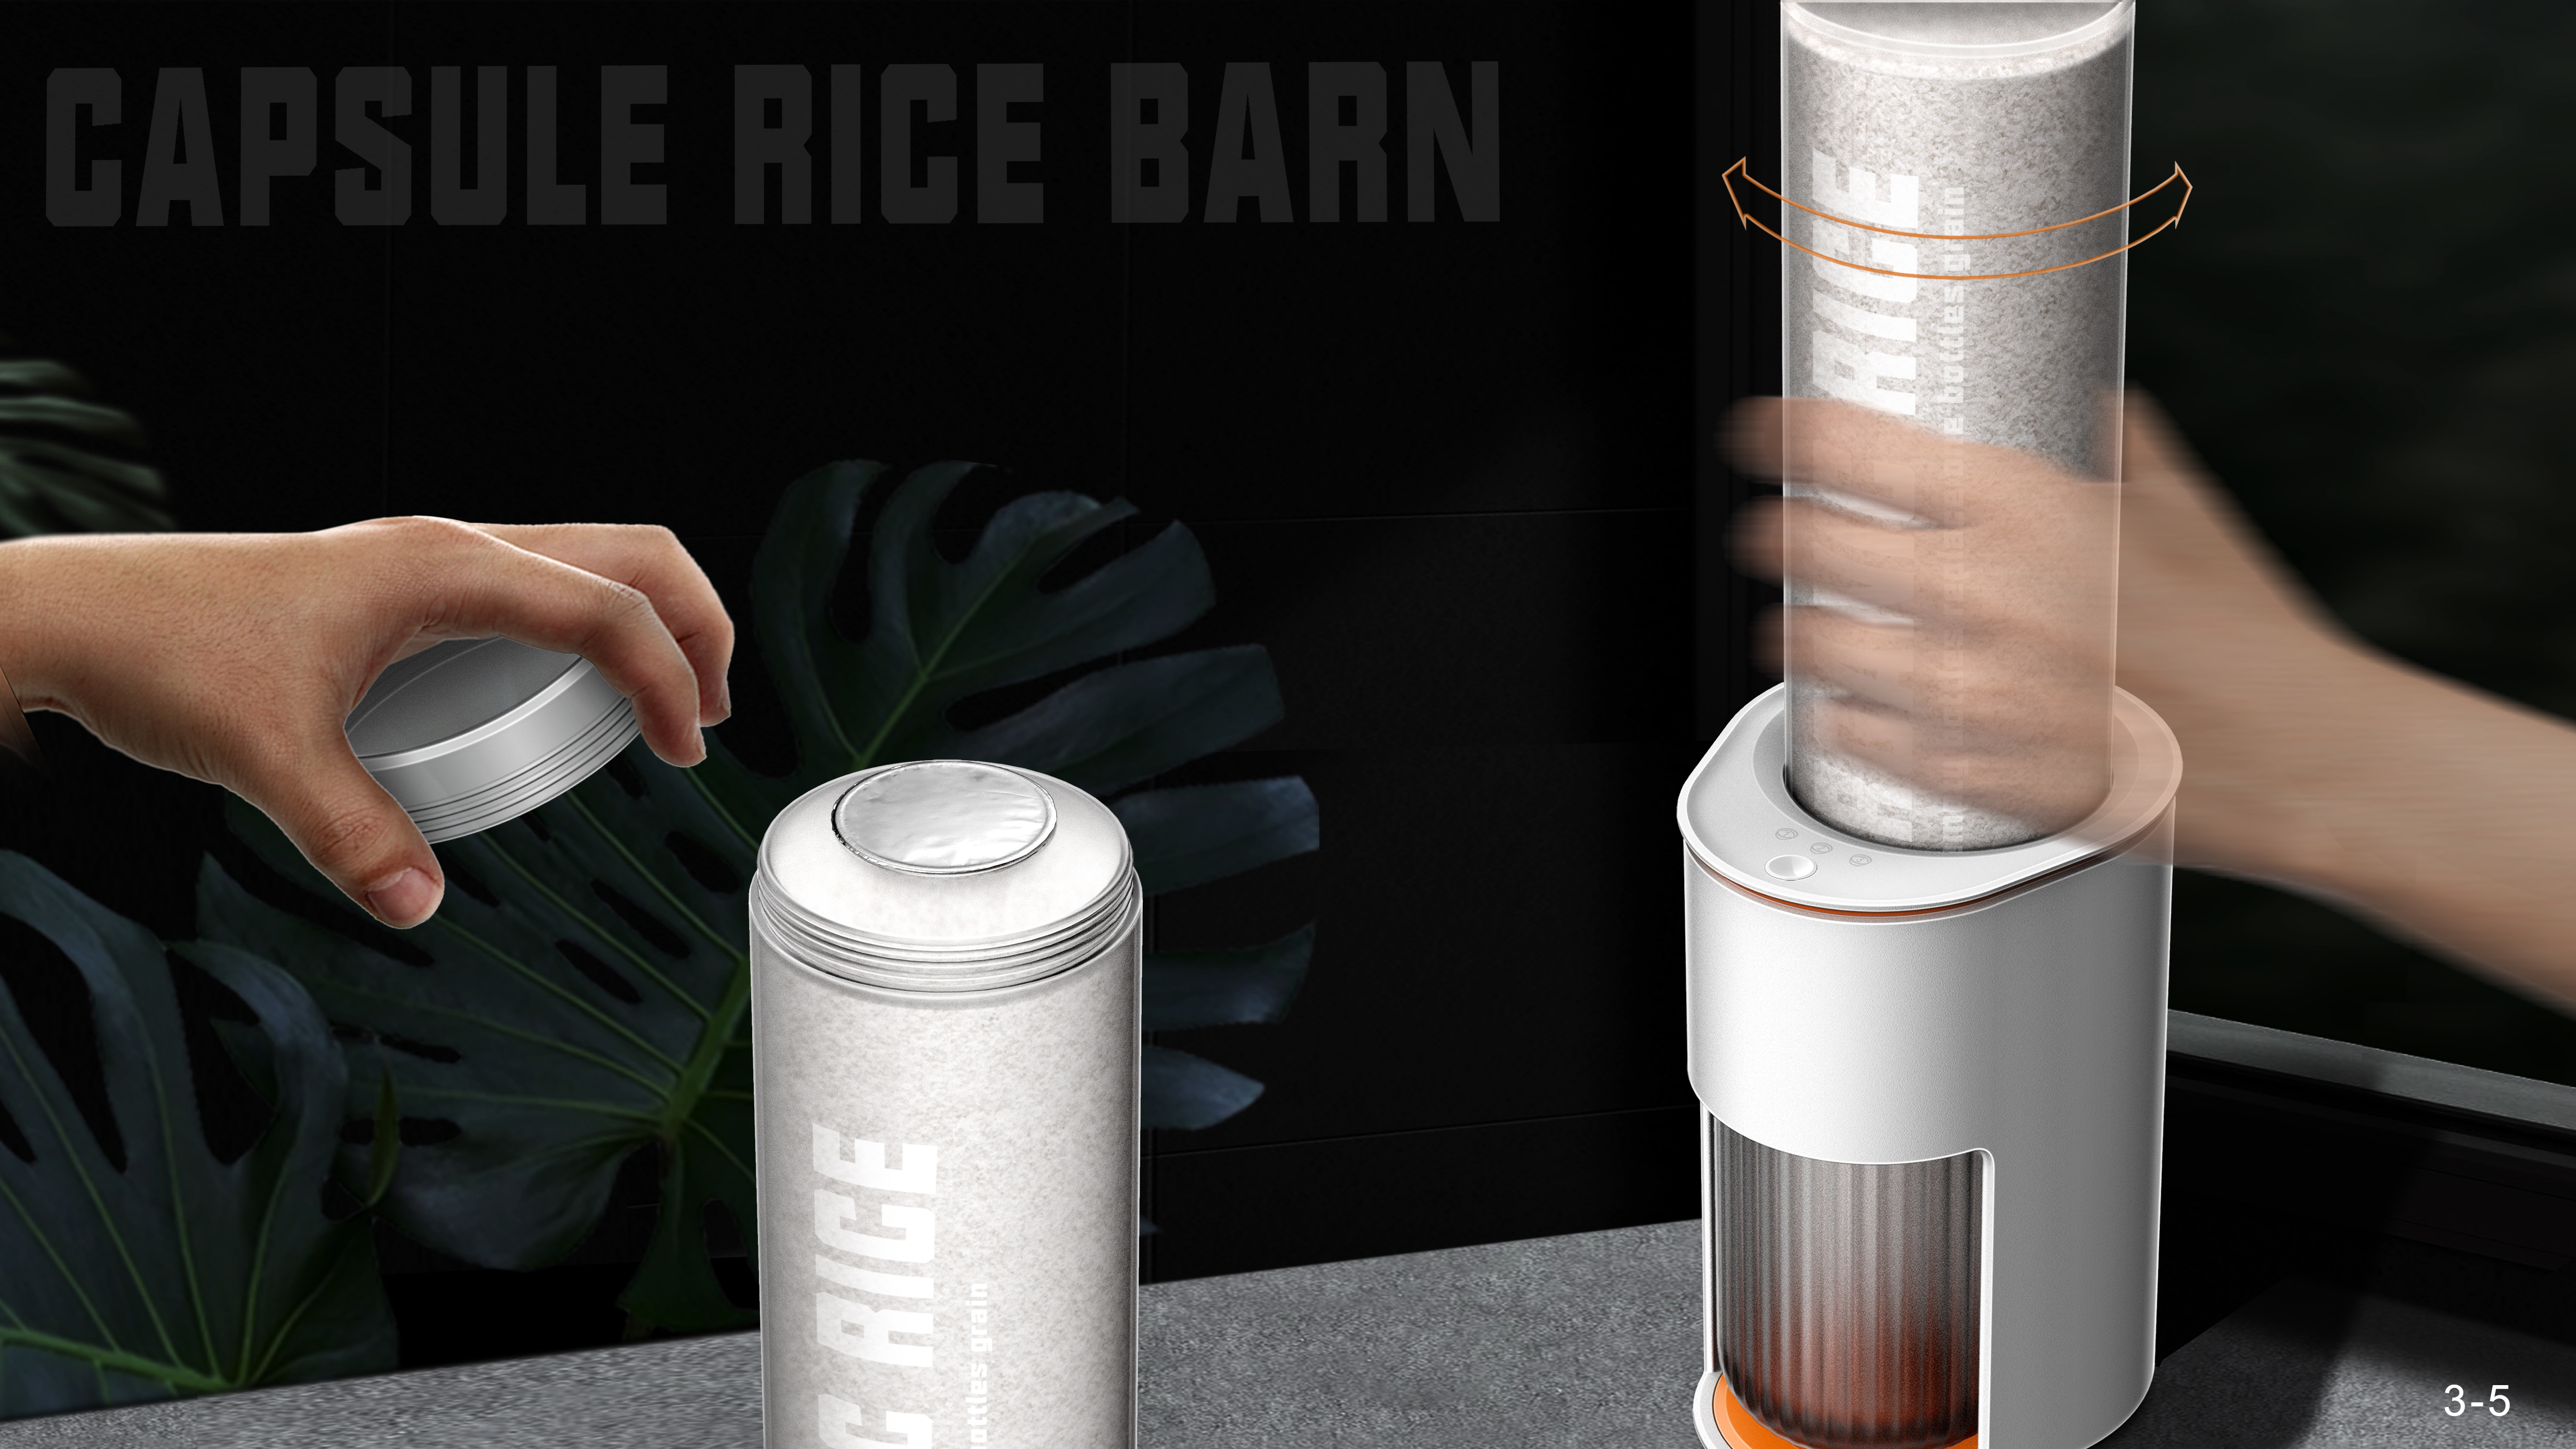 Capsule rice barn